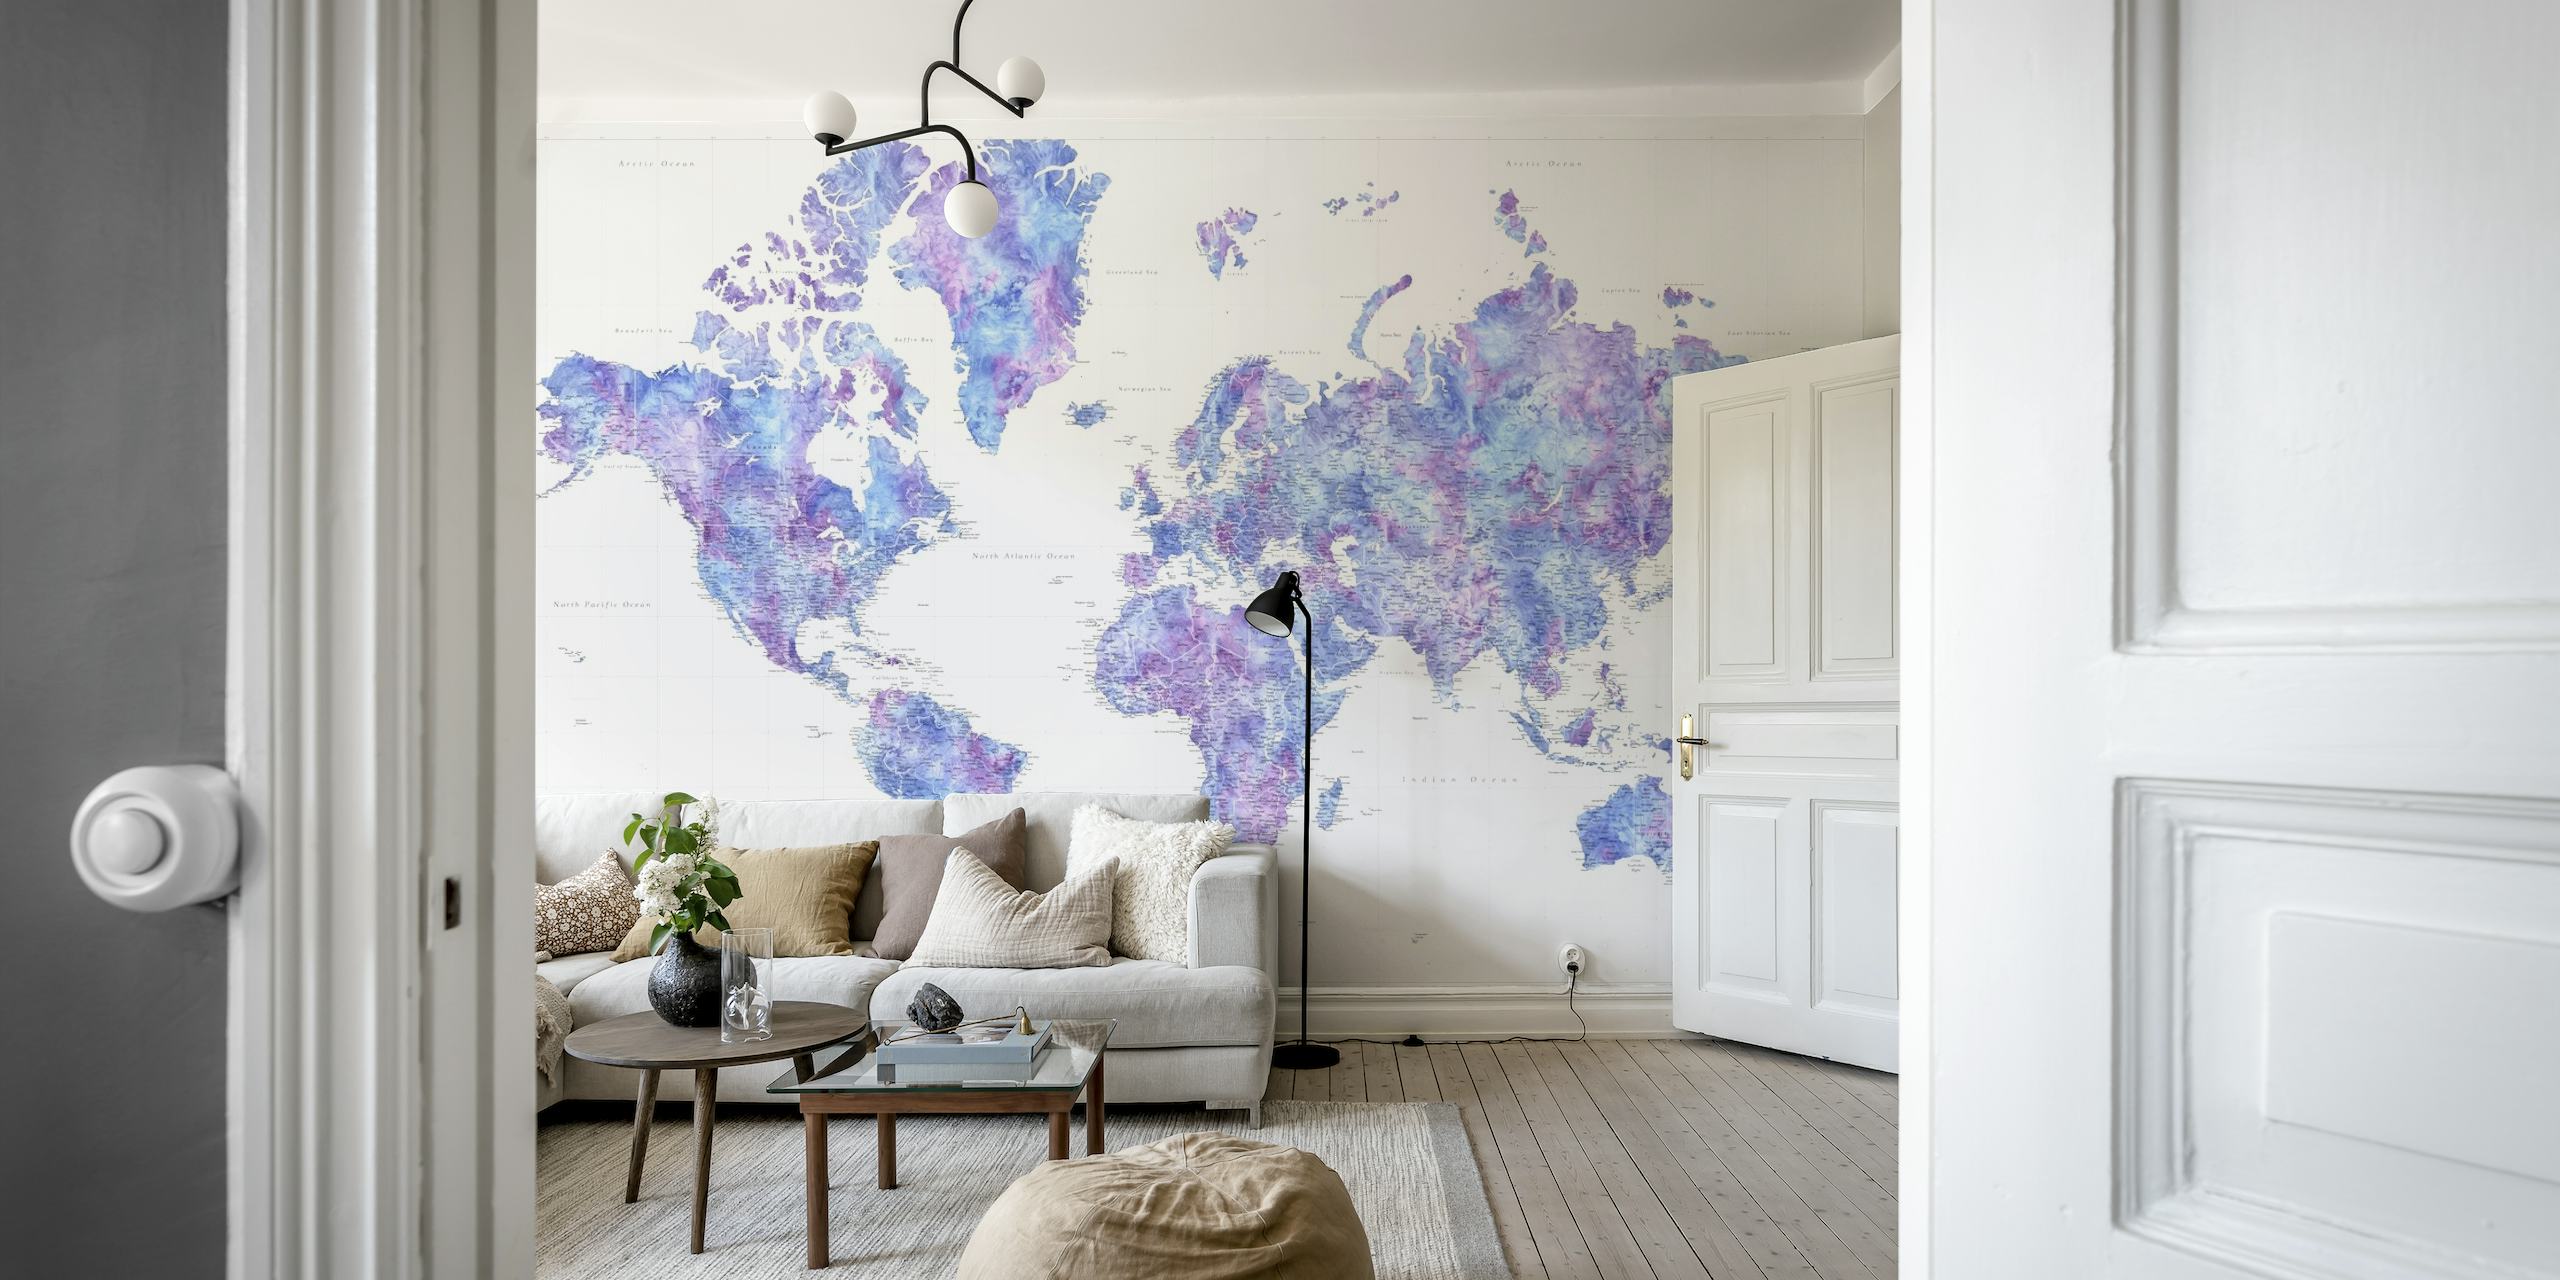 Mural de pared con mapamundi colorido y alto detalle